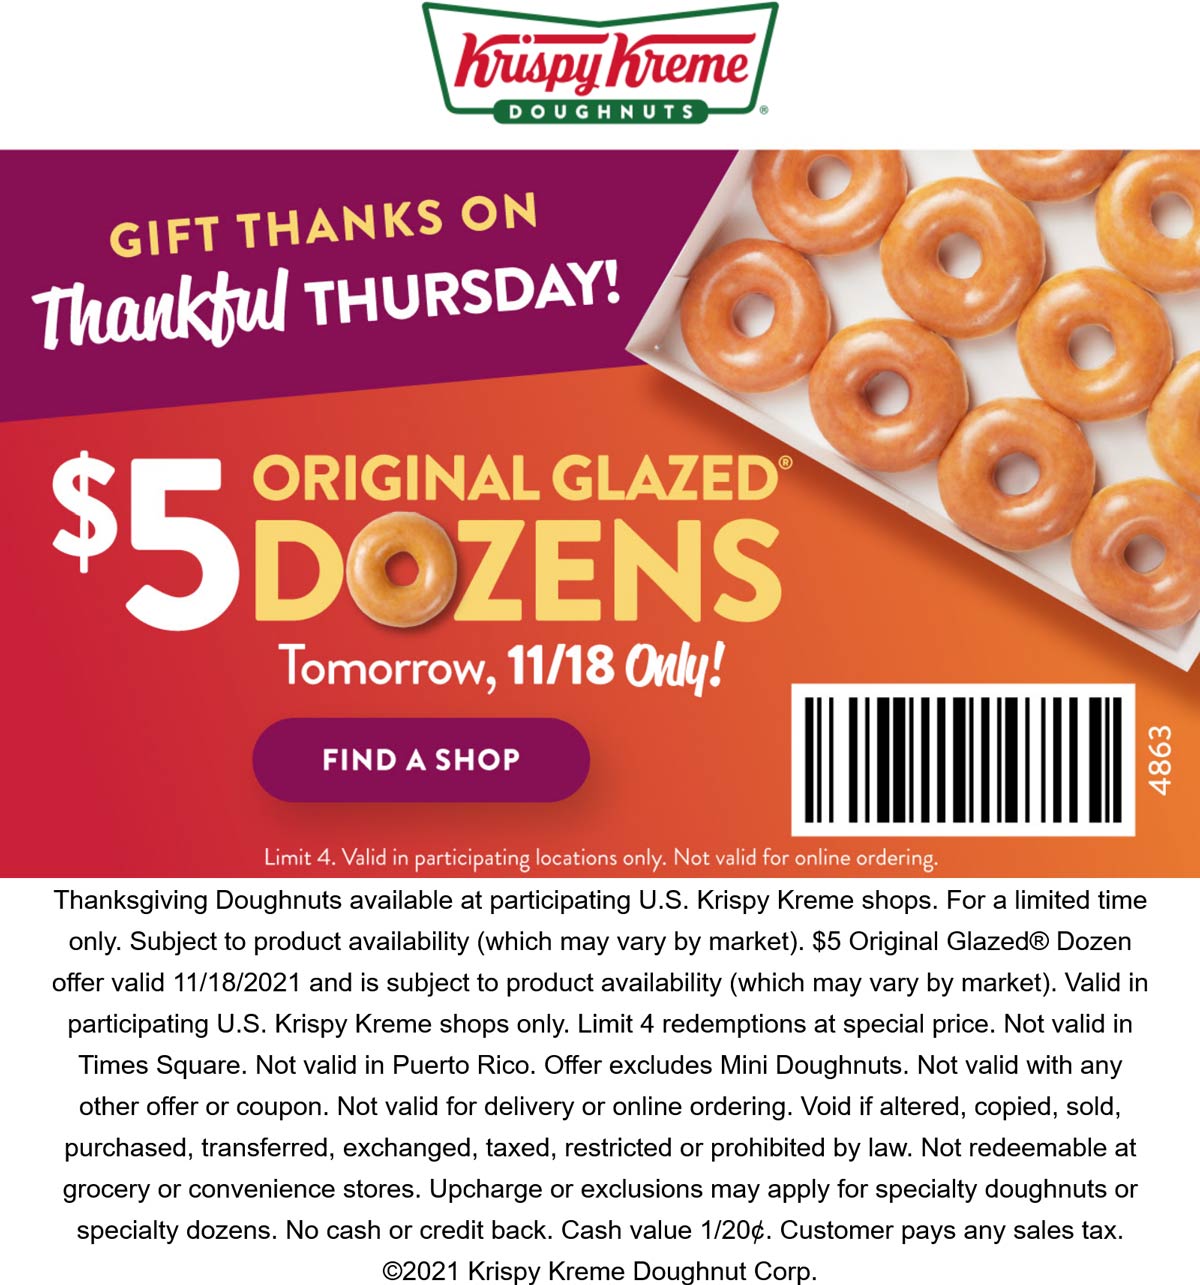 Krispy Kreme restaurants Coupon  $5 glazed dozens Thursday at Krispy Kreme doughnuts #krispykreme 